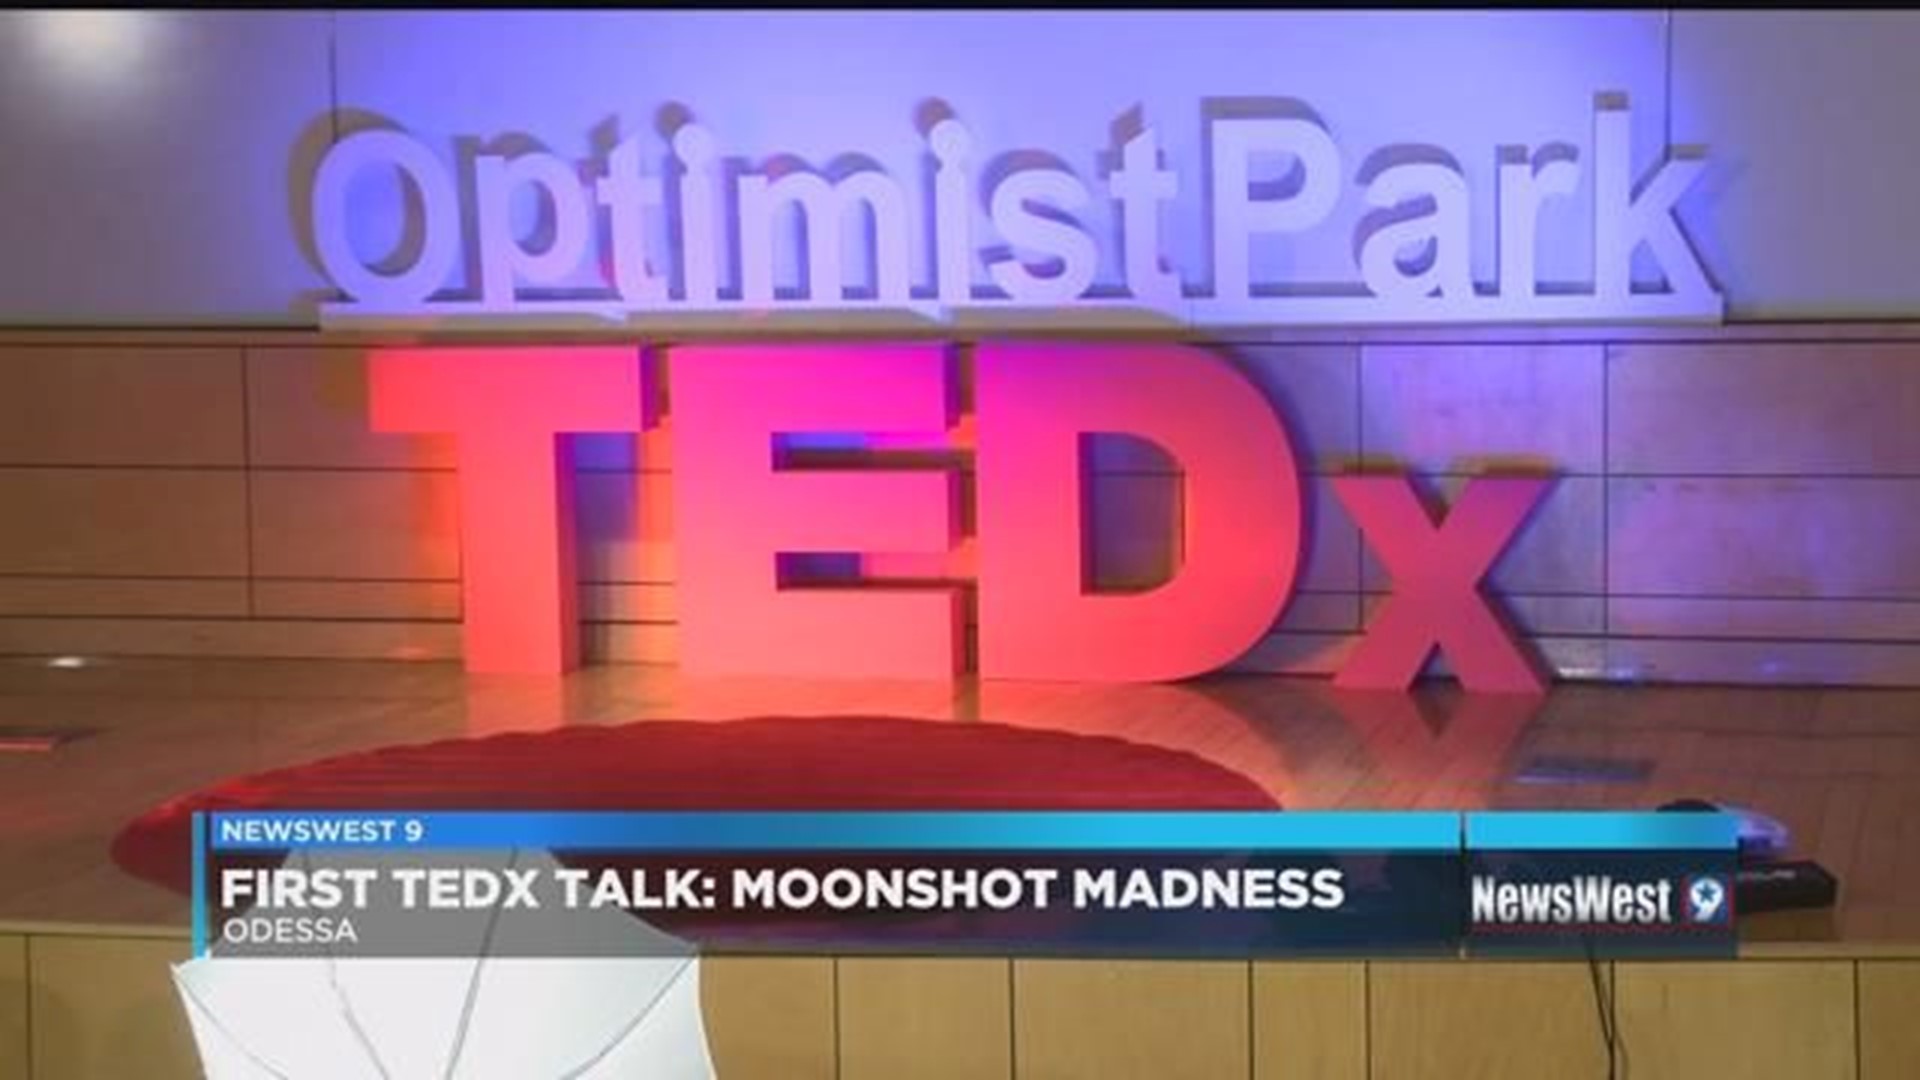 Odessa presents it's first Ted Talk